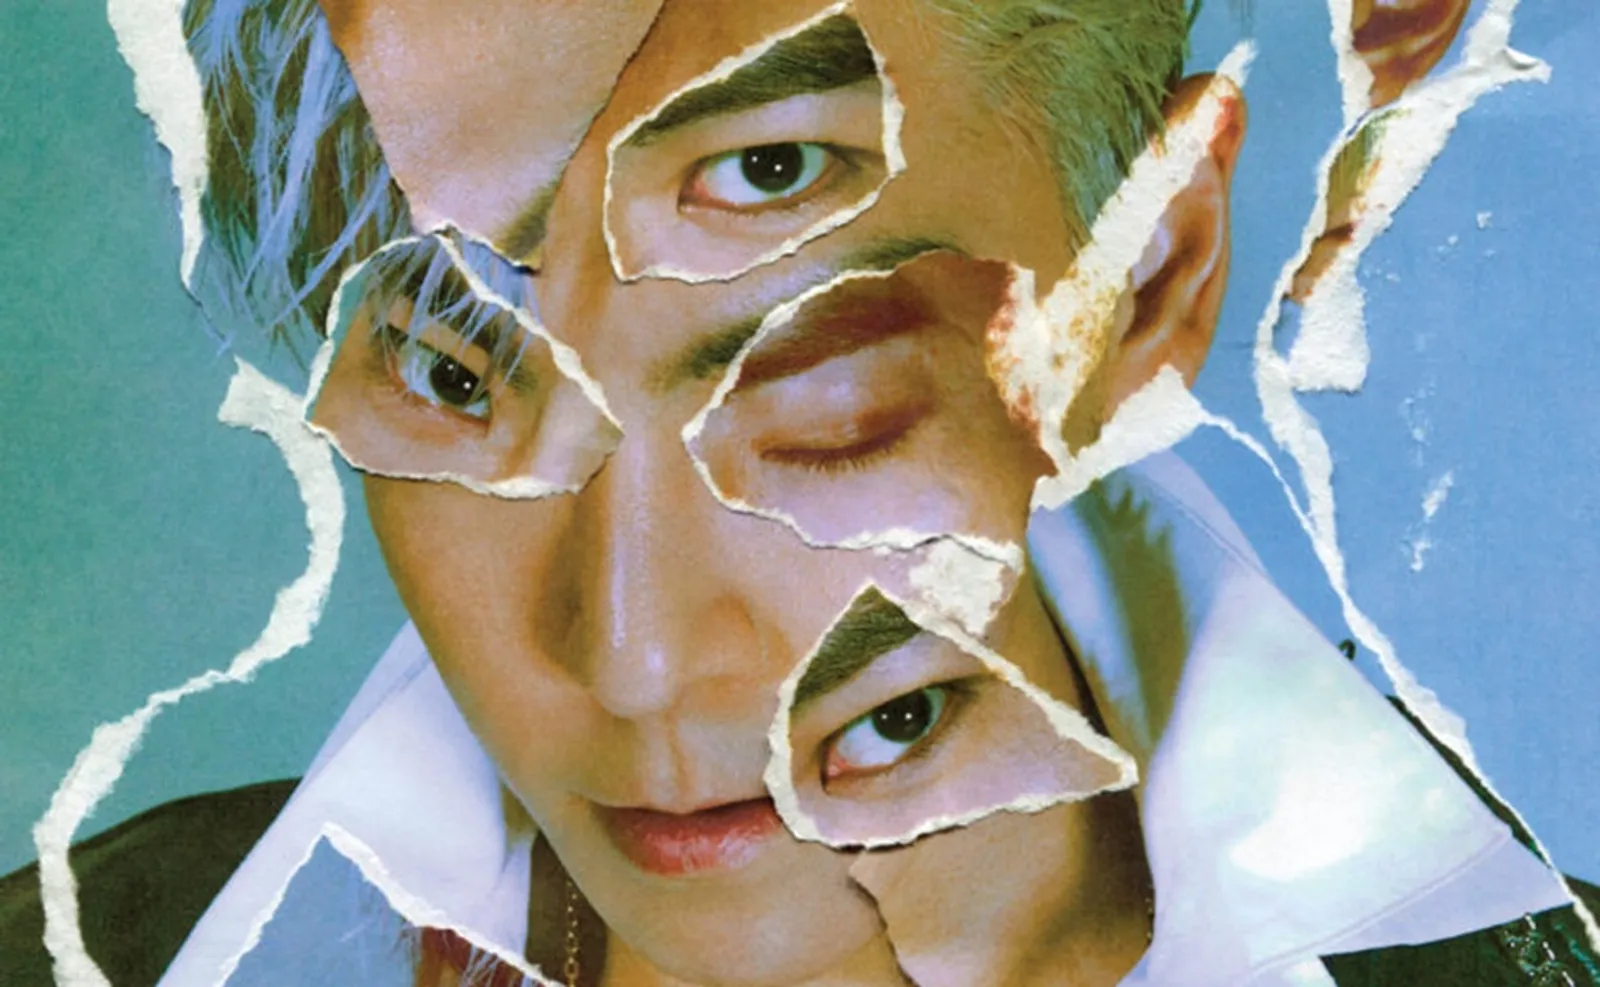 Hampir Bunuh Diri, 7 Pengakuan T.O.P 'BIGBANG' Usai Hiatus Panjang